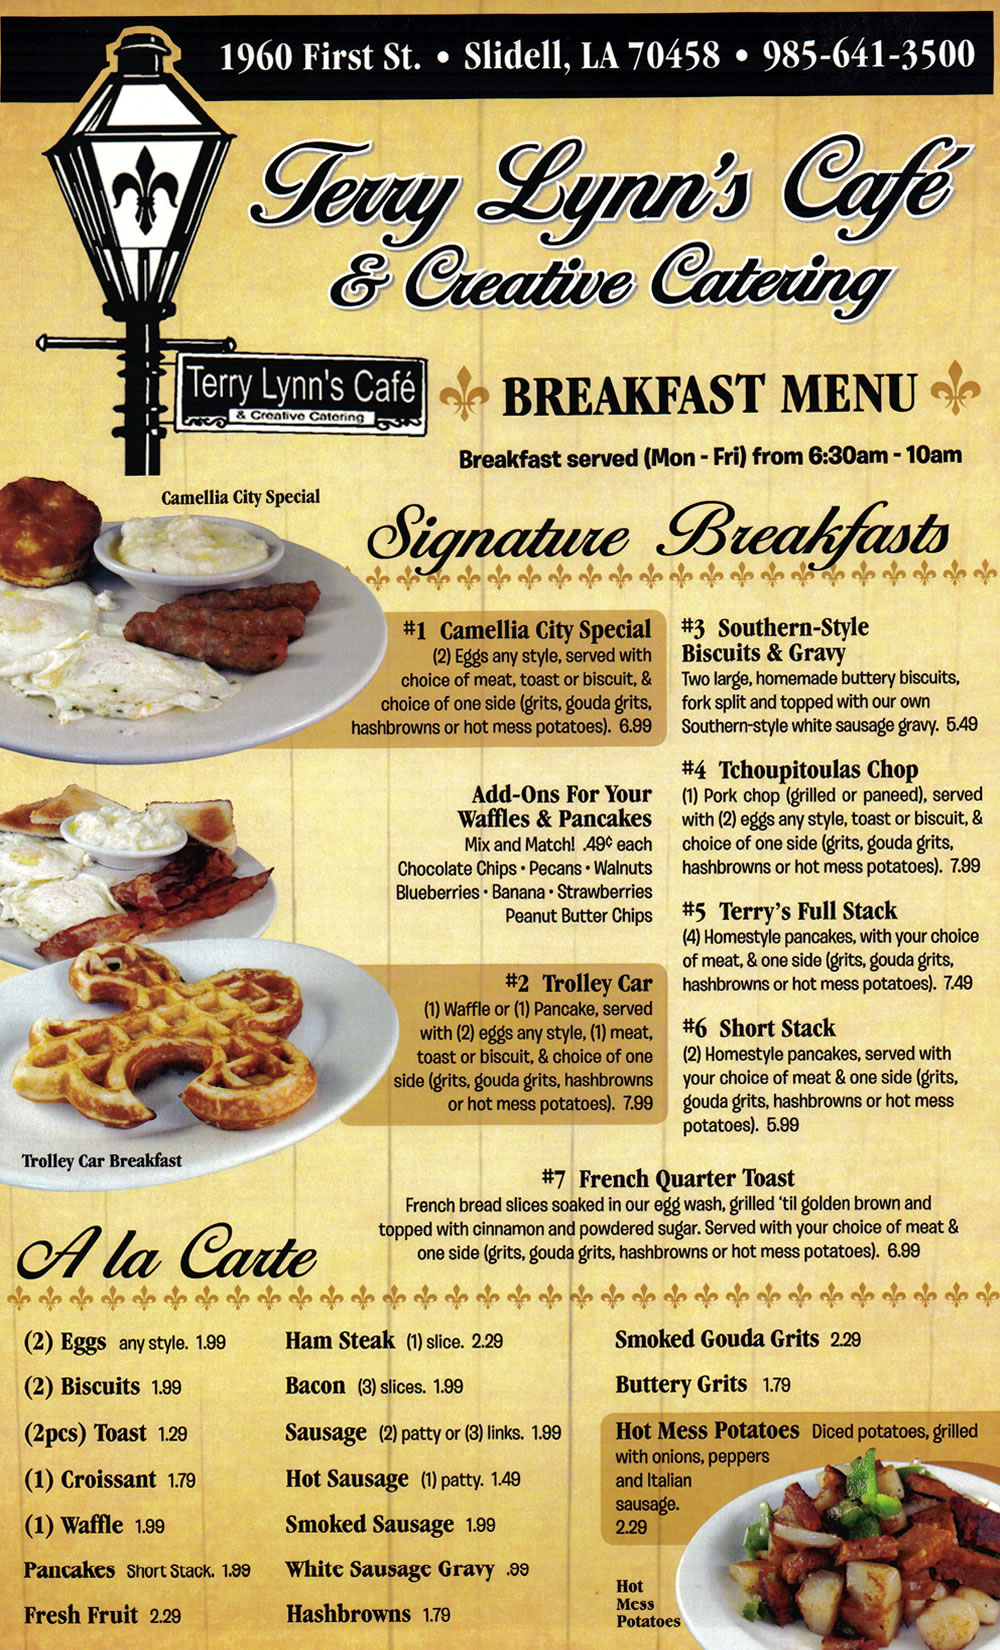 Breakfast Menu – Terry Lynn's Cafe & Creative Catering